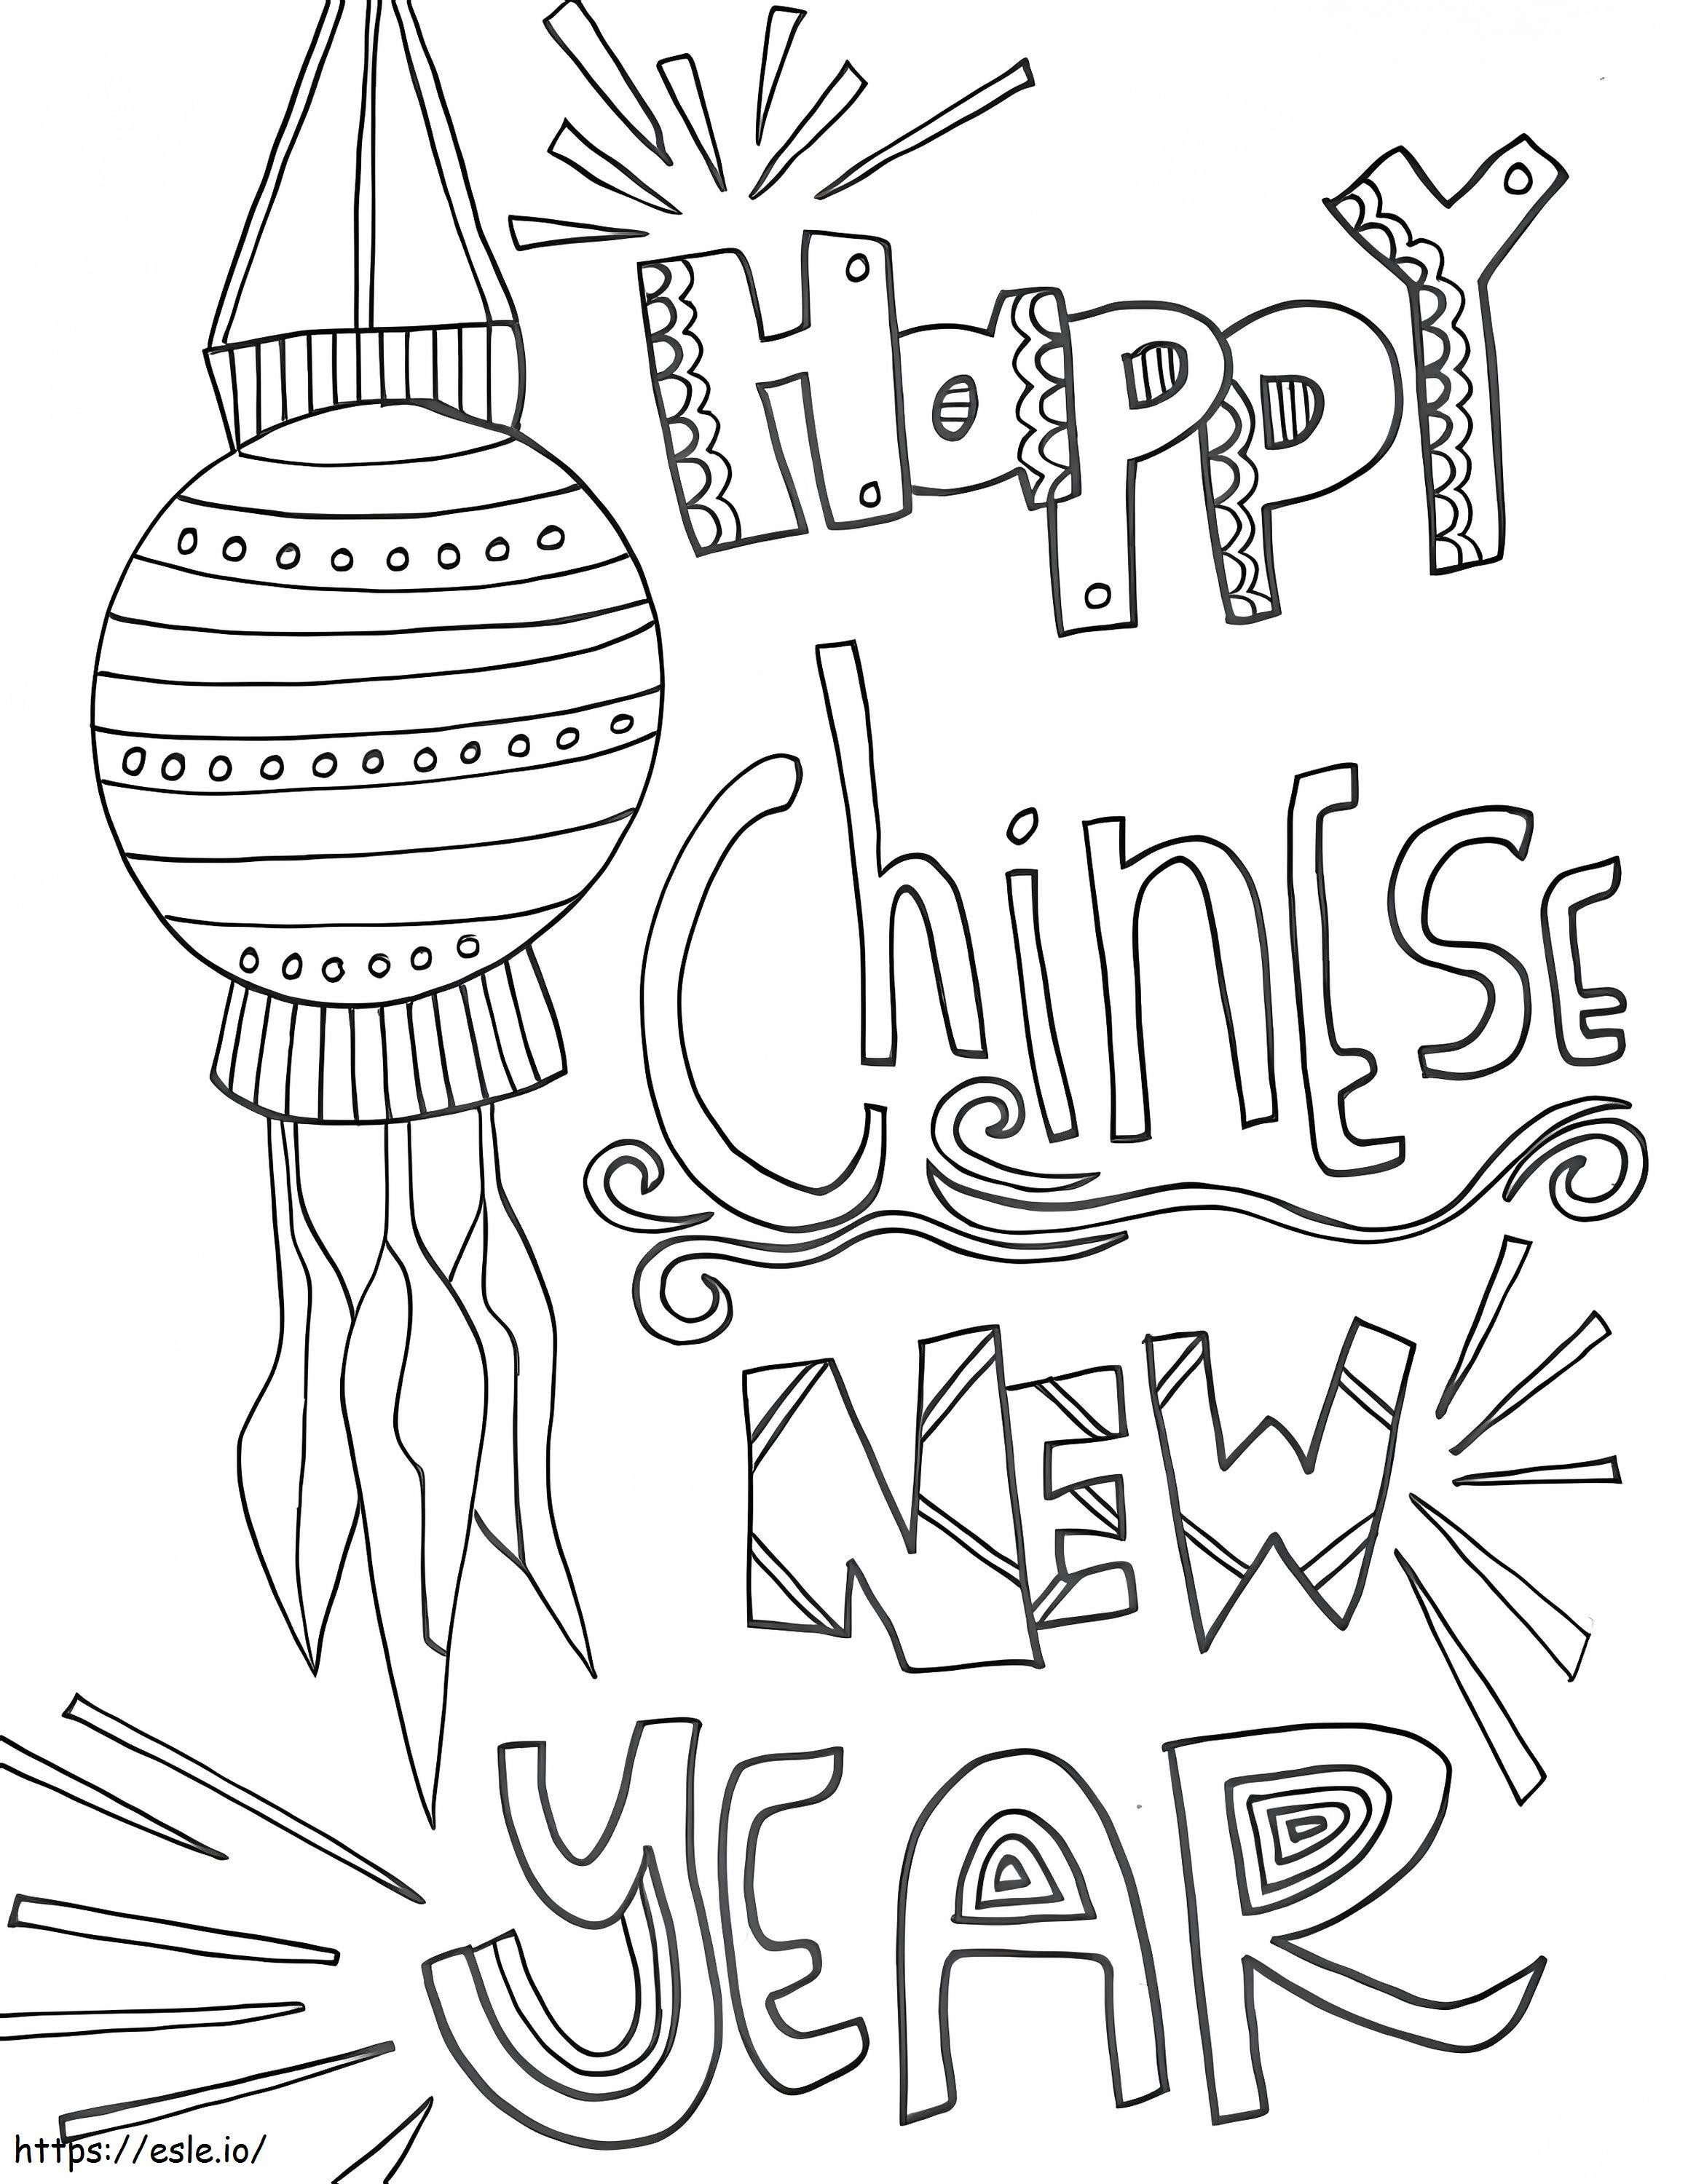 Gelukkig Chinees nieuwjaar kleurplaat kleurplaat